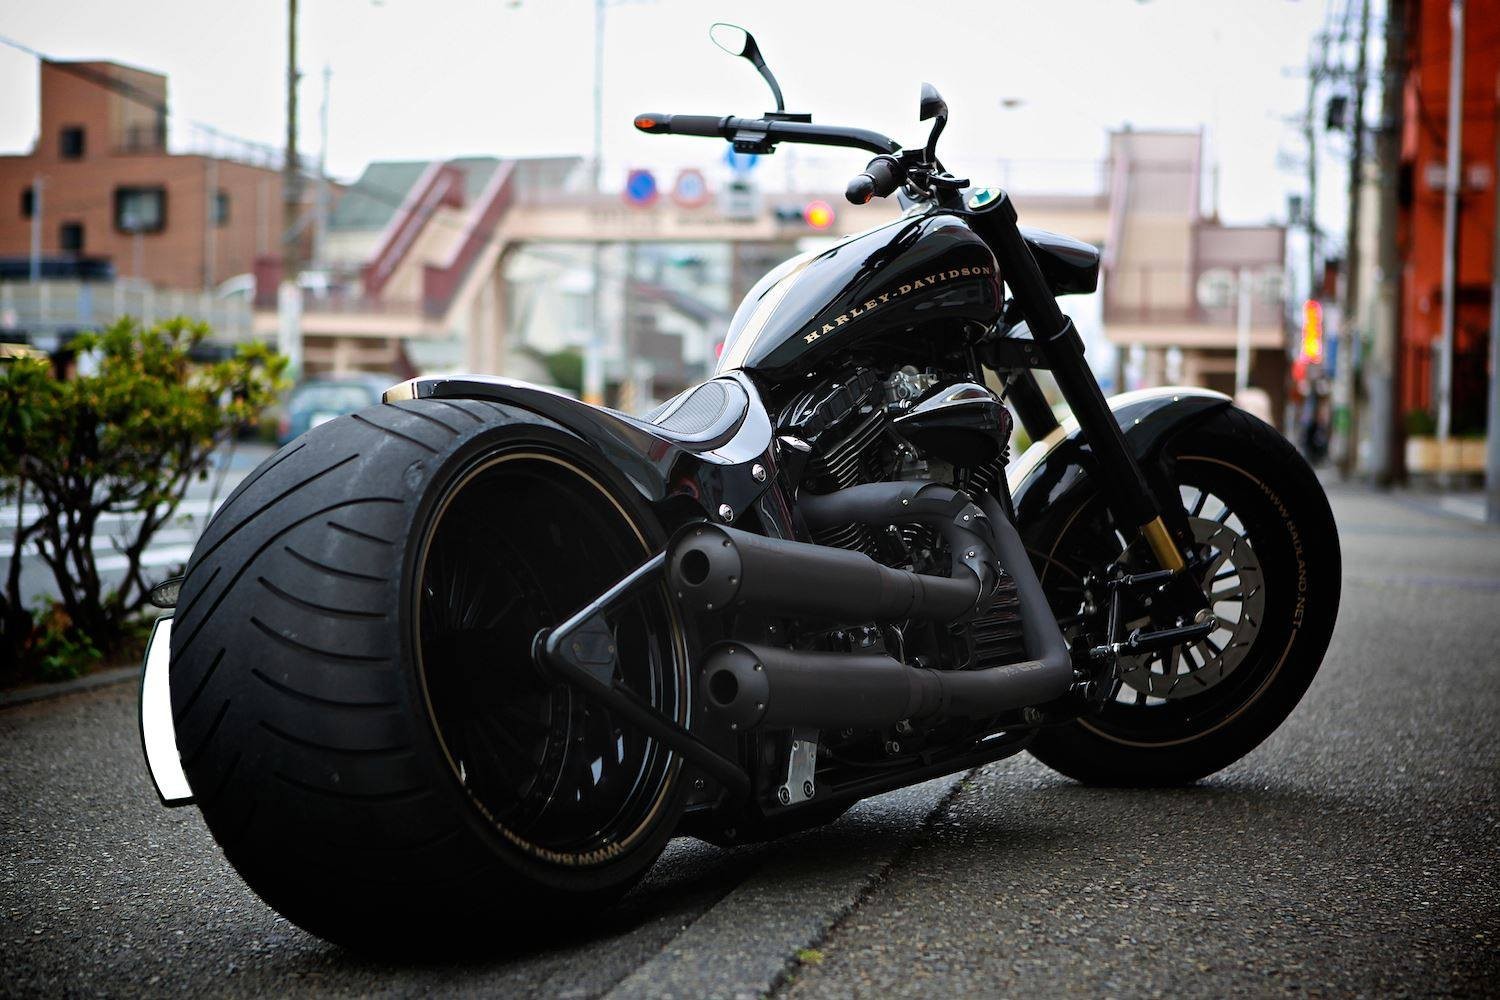 General 1500x1000 Harley-Davidson vehicle motorcycle black motorcycles American motorcycles